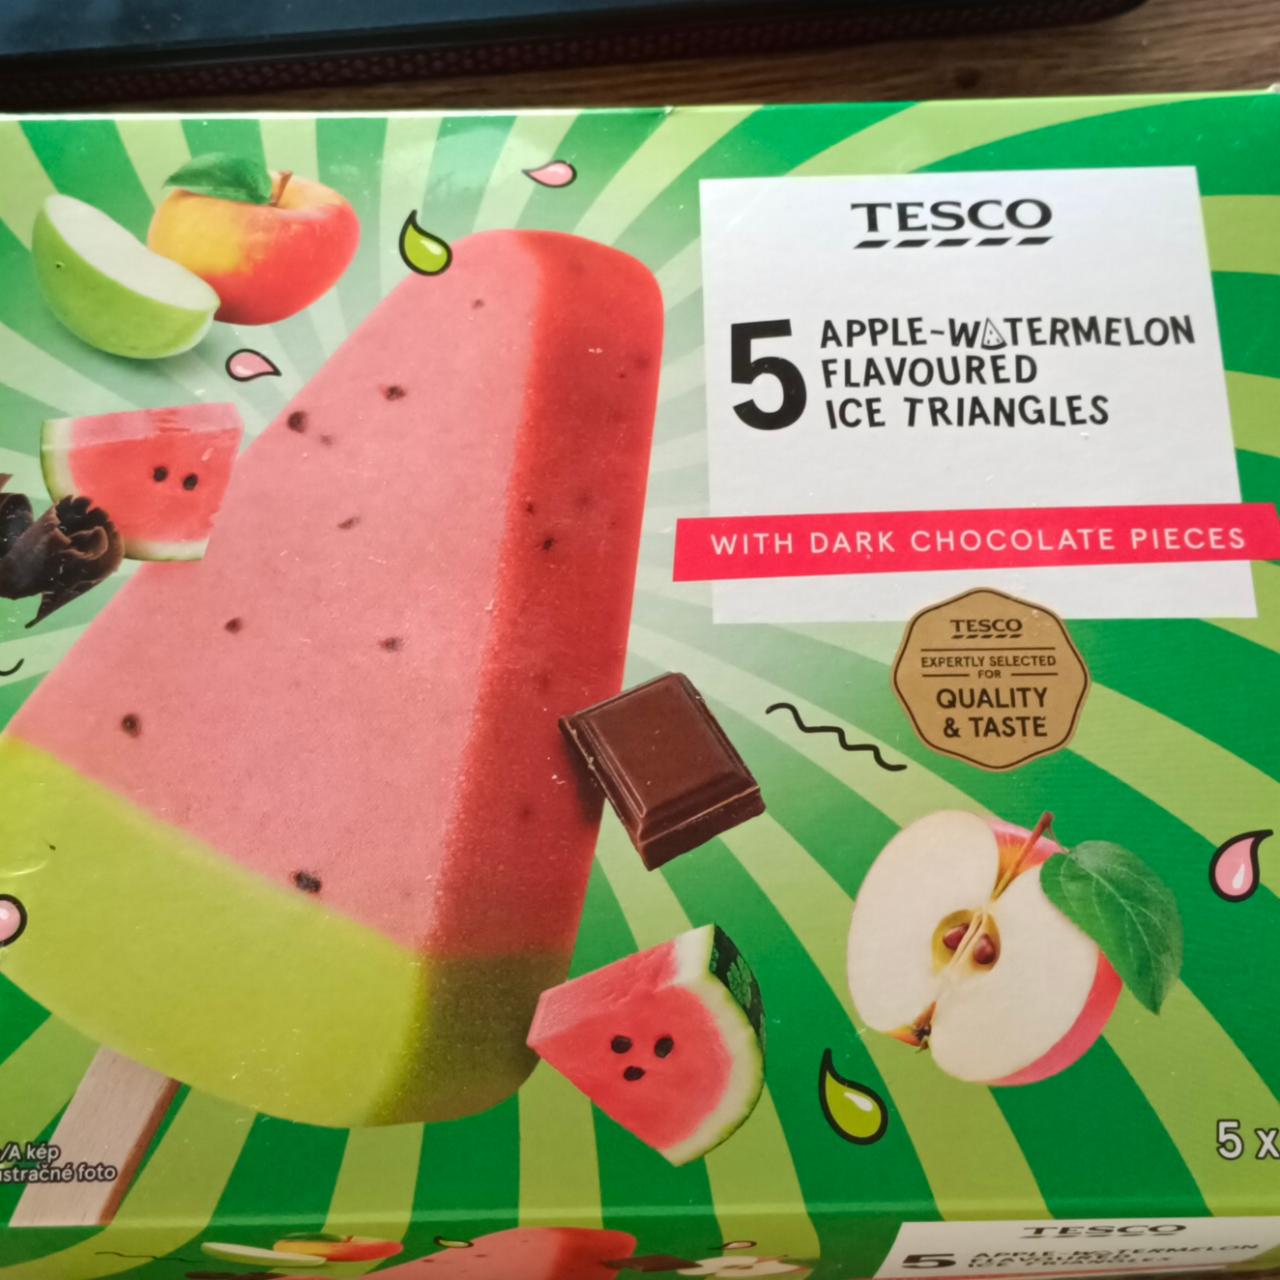 Fotografie - Apple-Watermelon Flavoured Ice Triangles with Dark Chocolate Pieces Tesco